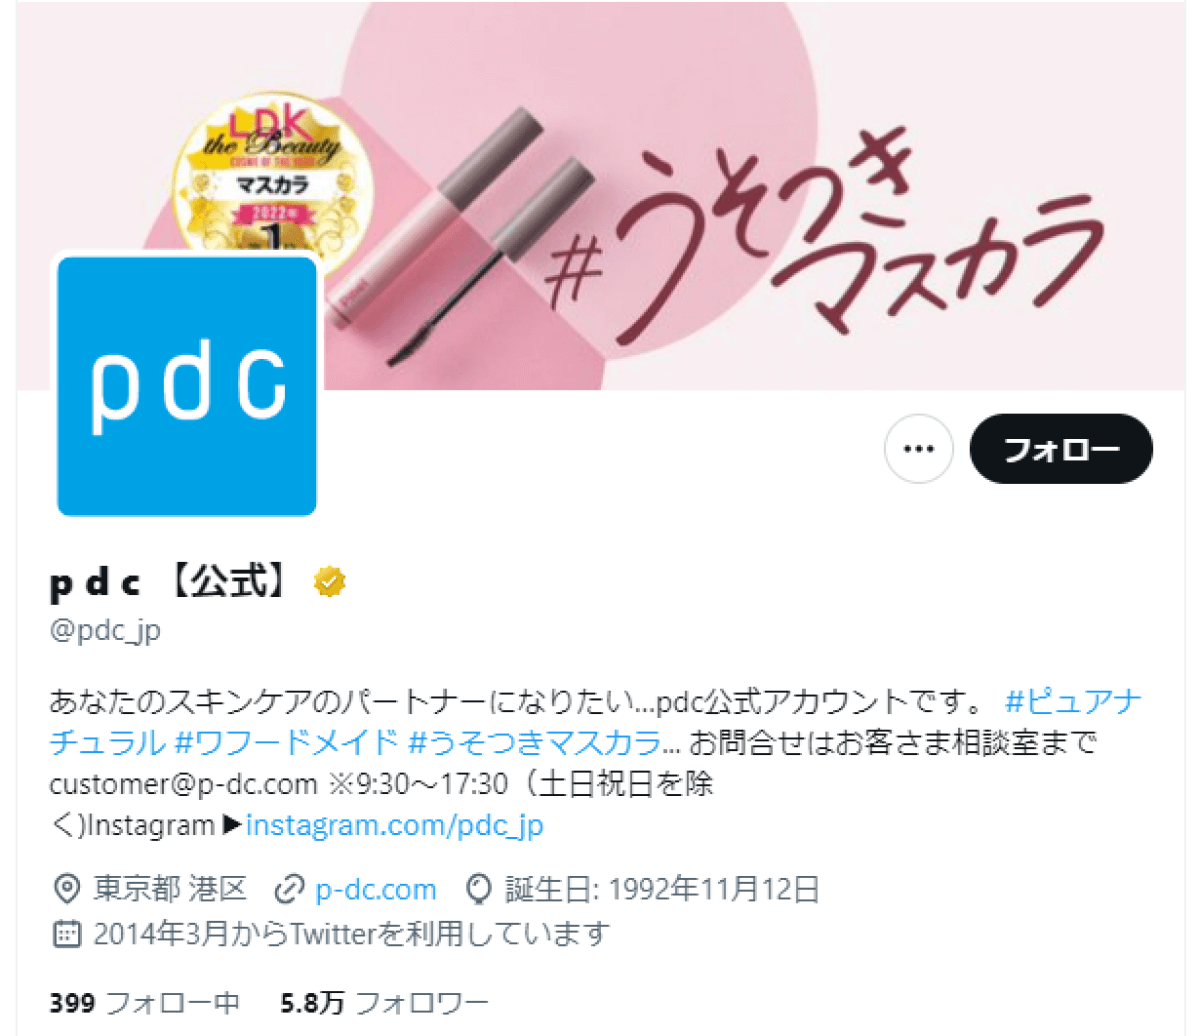 x-account-pdc-jp